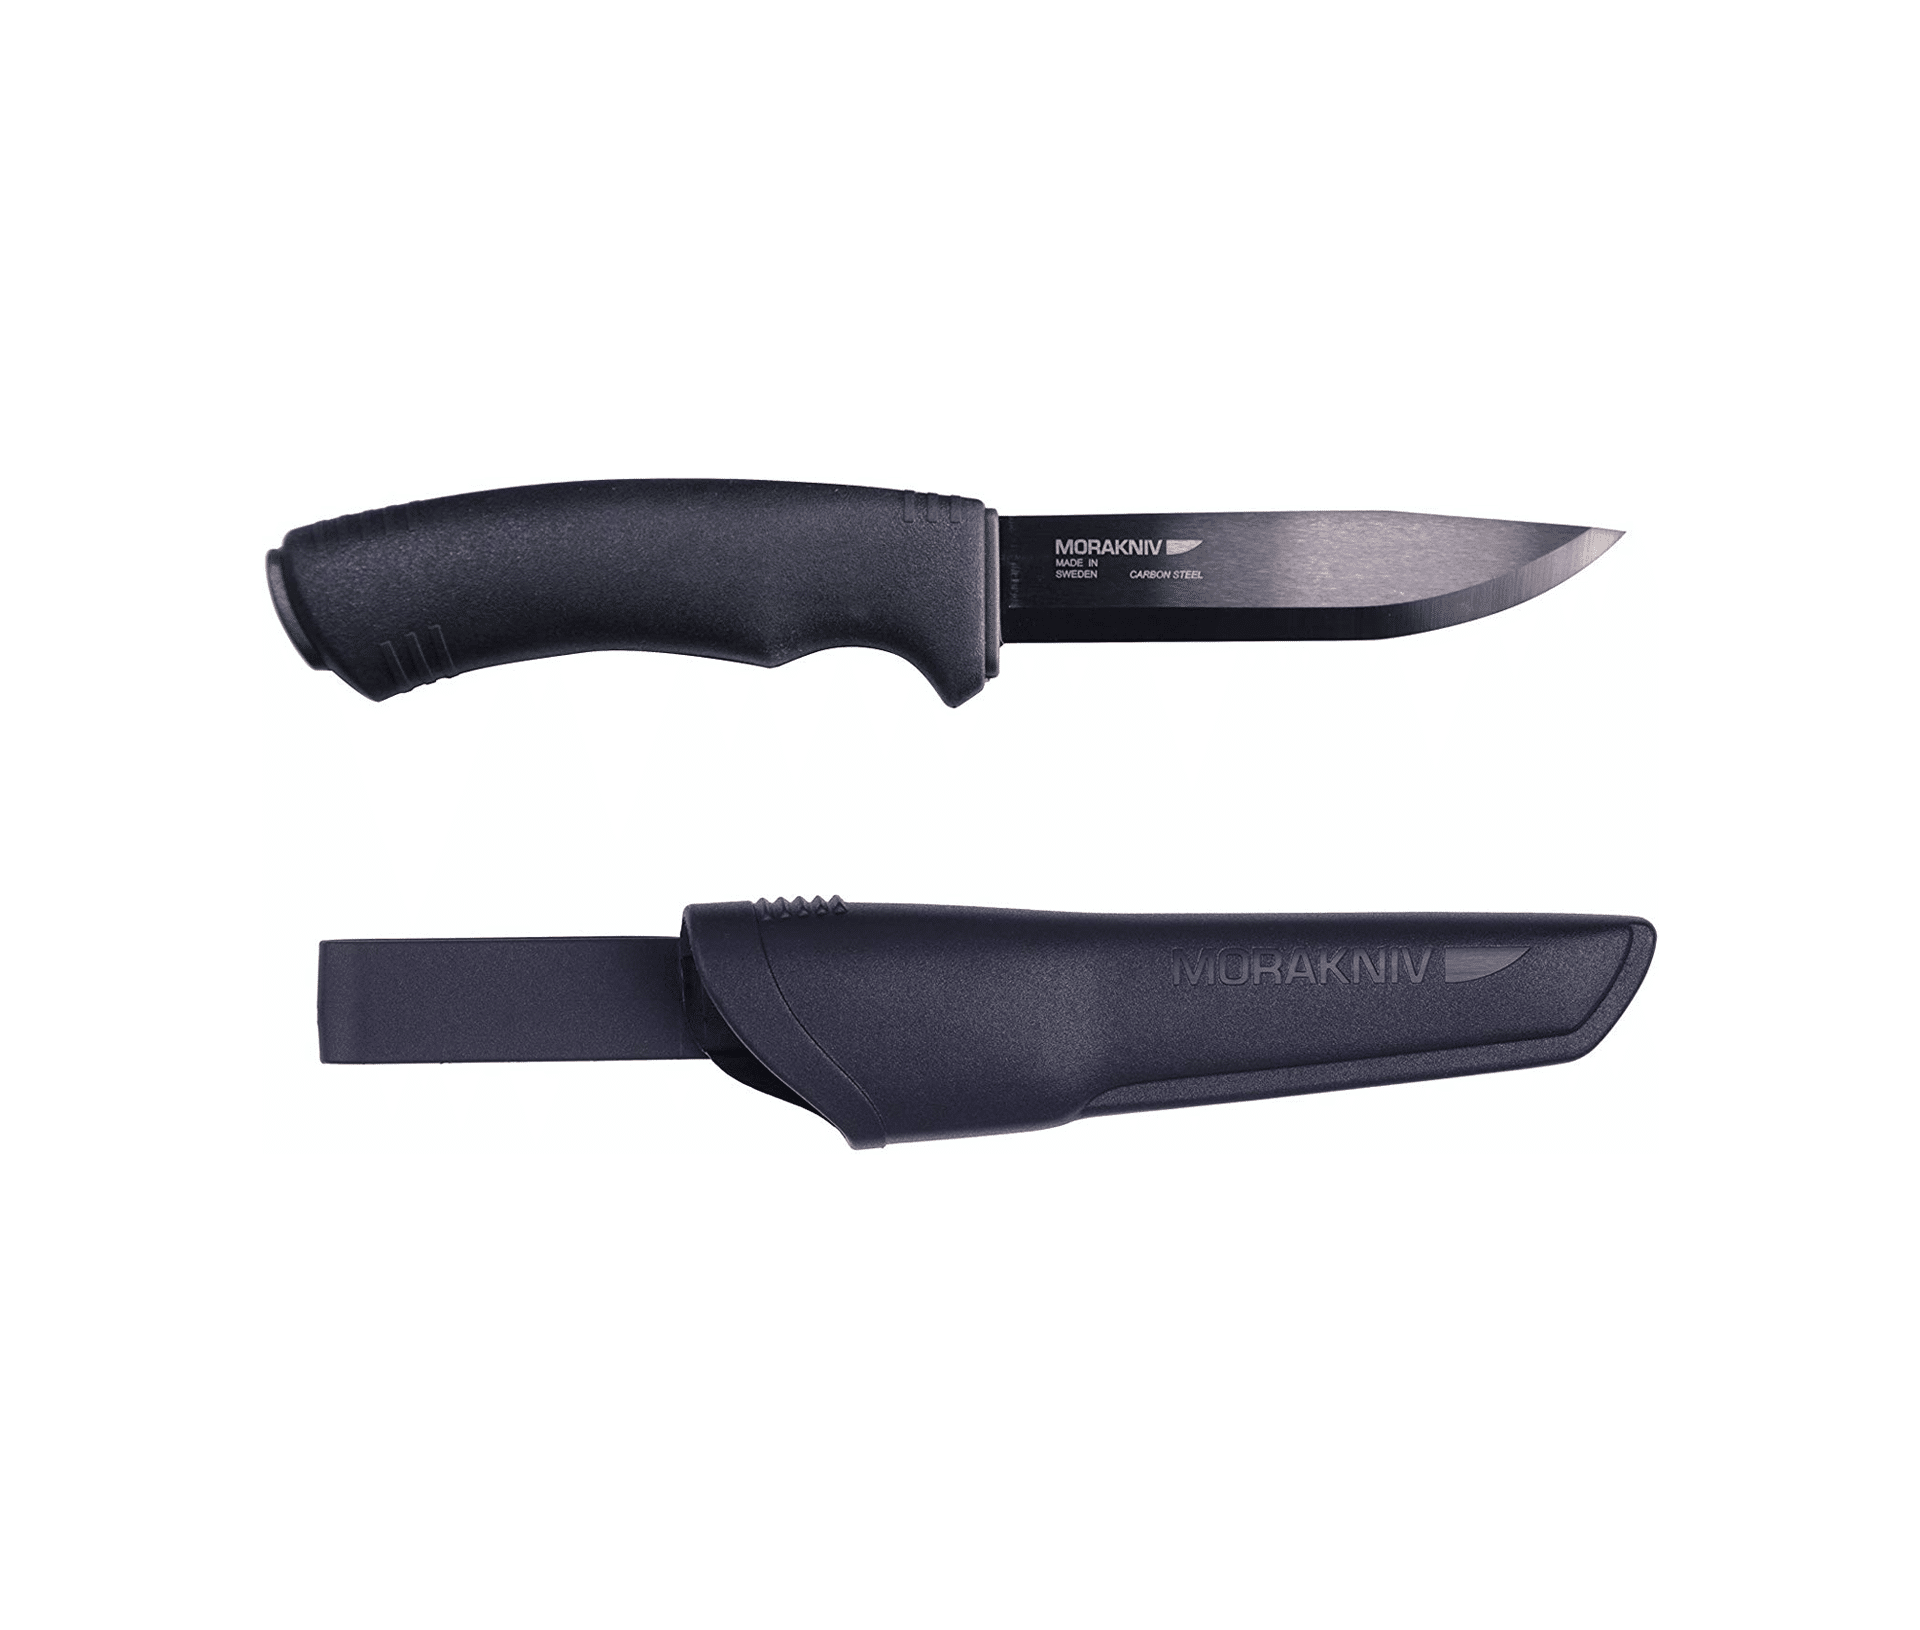 Morakniv Black Bushcraft Knife